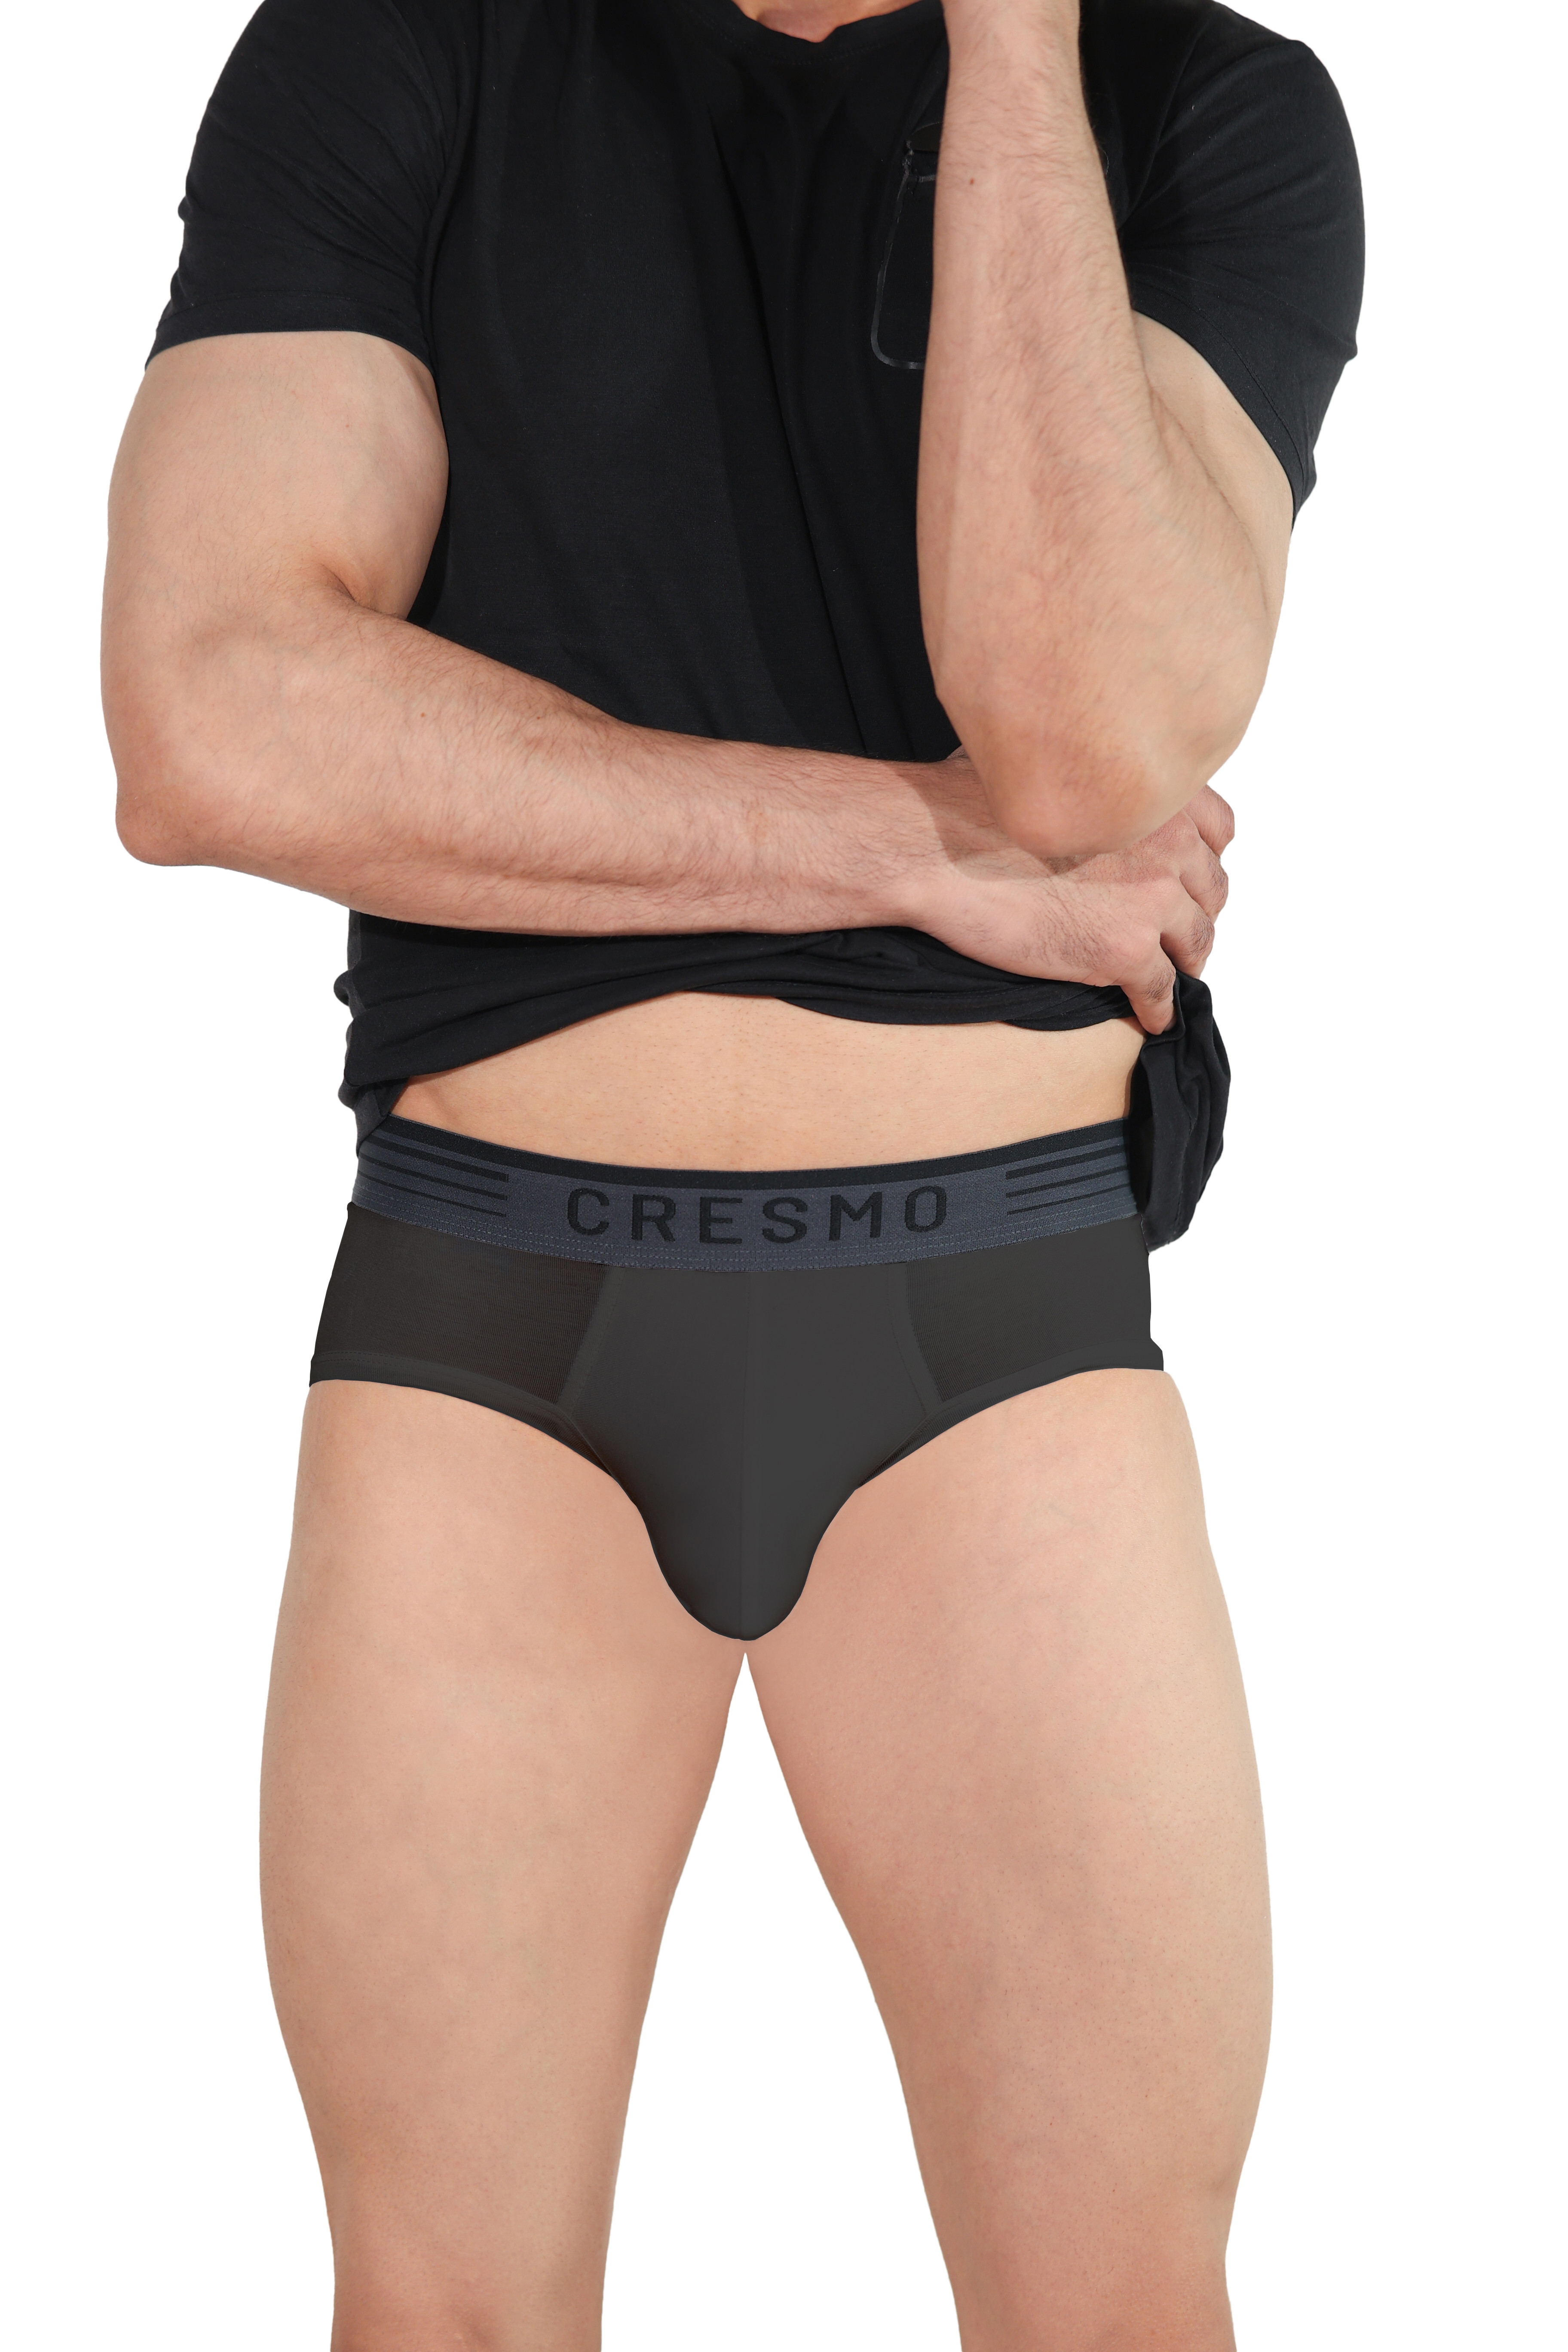 CRESMO | CRESMO Men's Microbial Micro Modal Underwear Breathable Ultra Soft Comfort Lightweight Brief